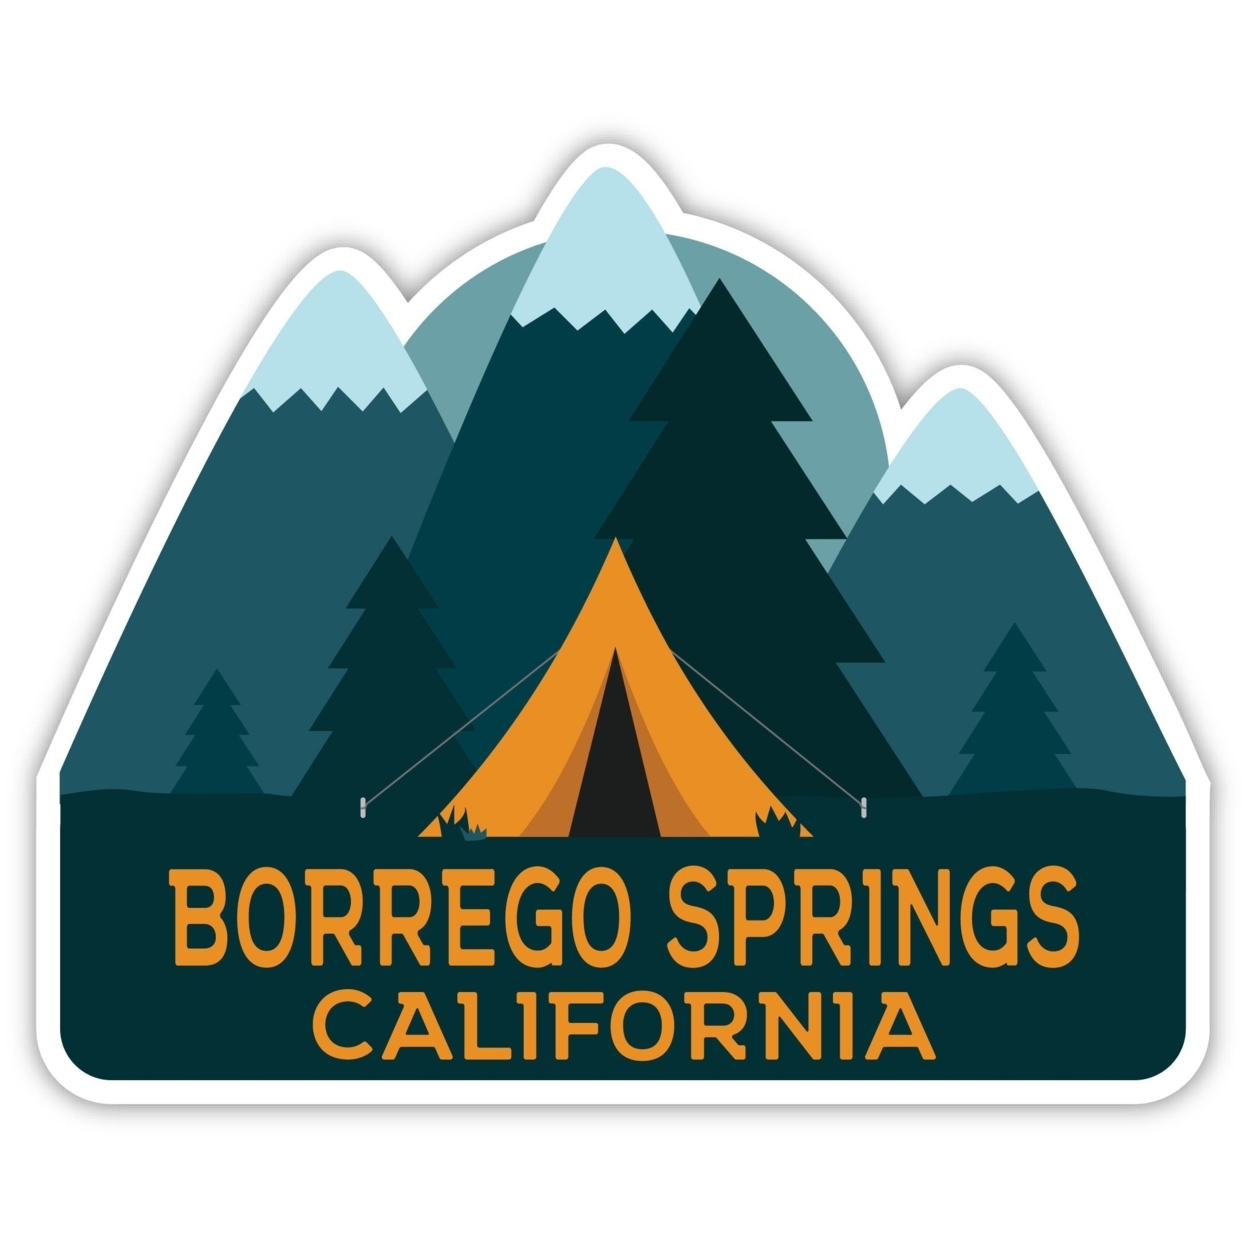 Borrego Springs California Souvenir Decorative Stickers (Choose Theme And Size) - Single Unit, 2-Inch, Adventures Awaits